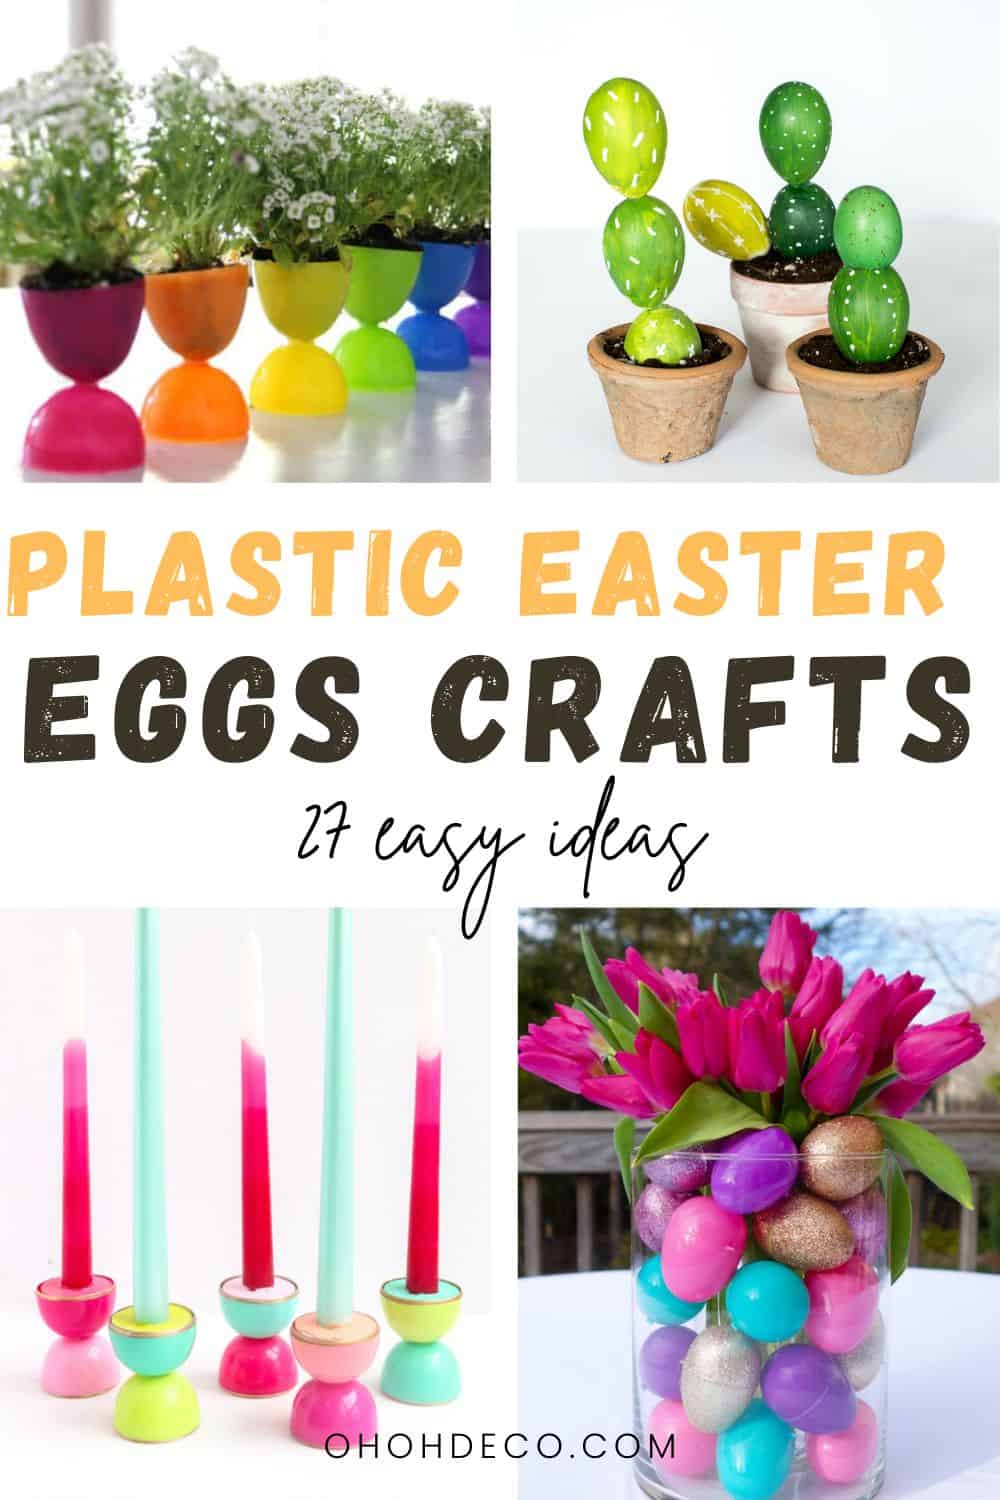 Plastic Easter eggs crafts 27 ideas